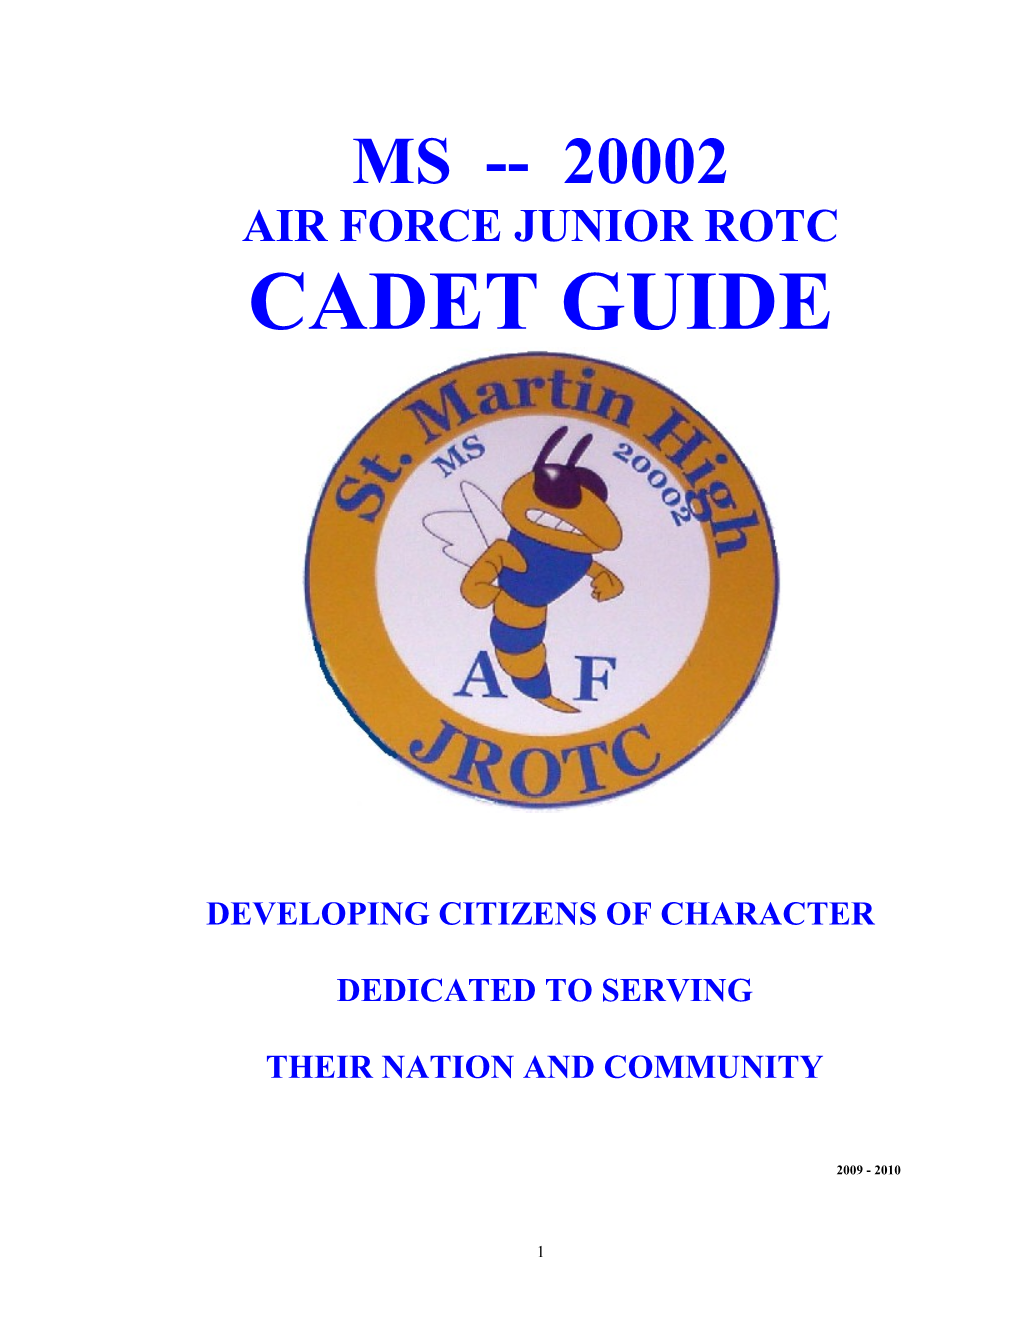 Air Force Junior Rotc